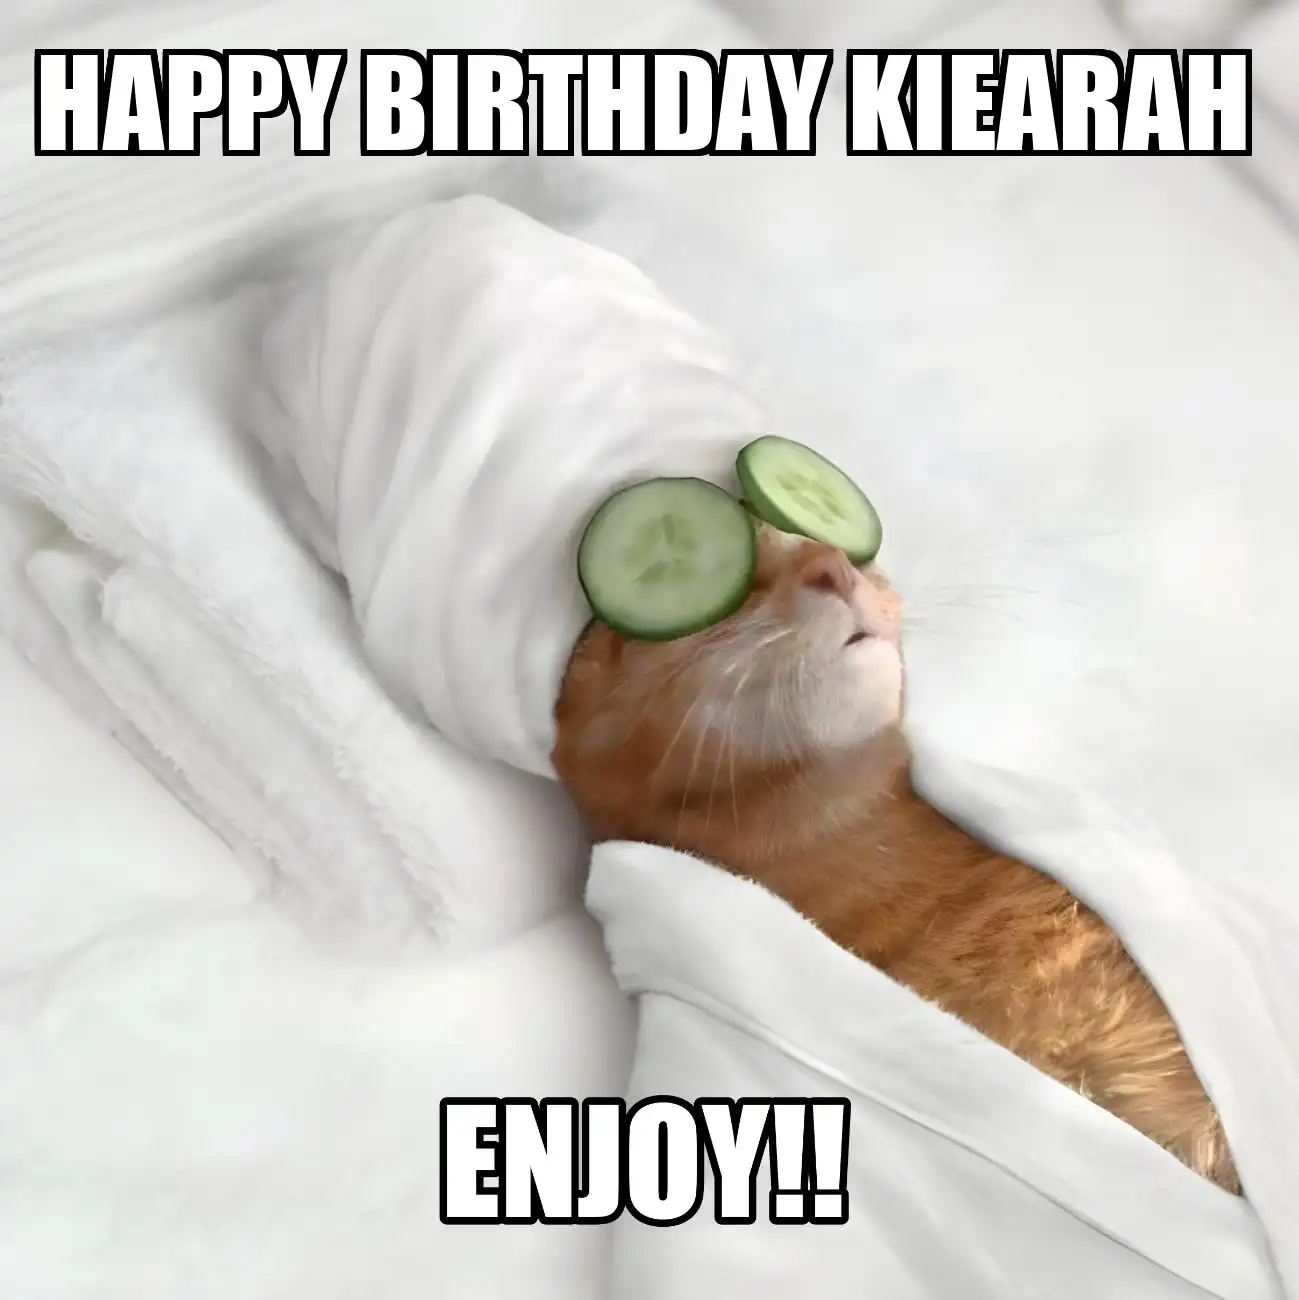 Happy Birthday Kiearah Enjoy Cat Meme